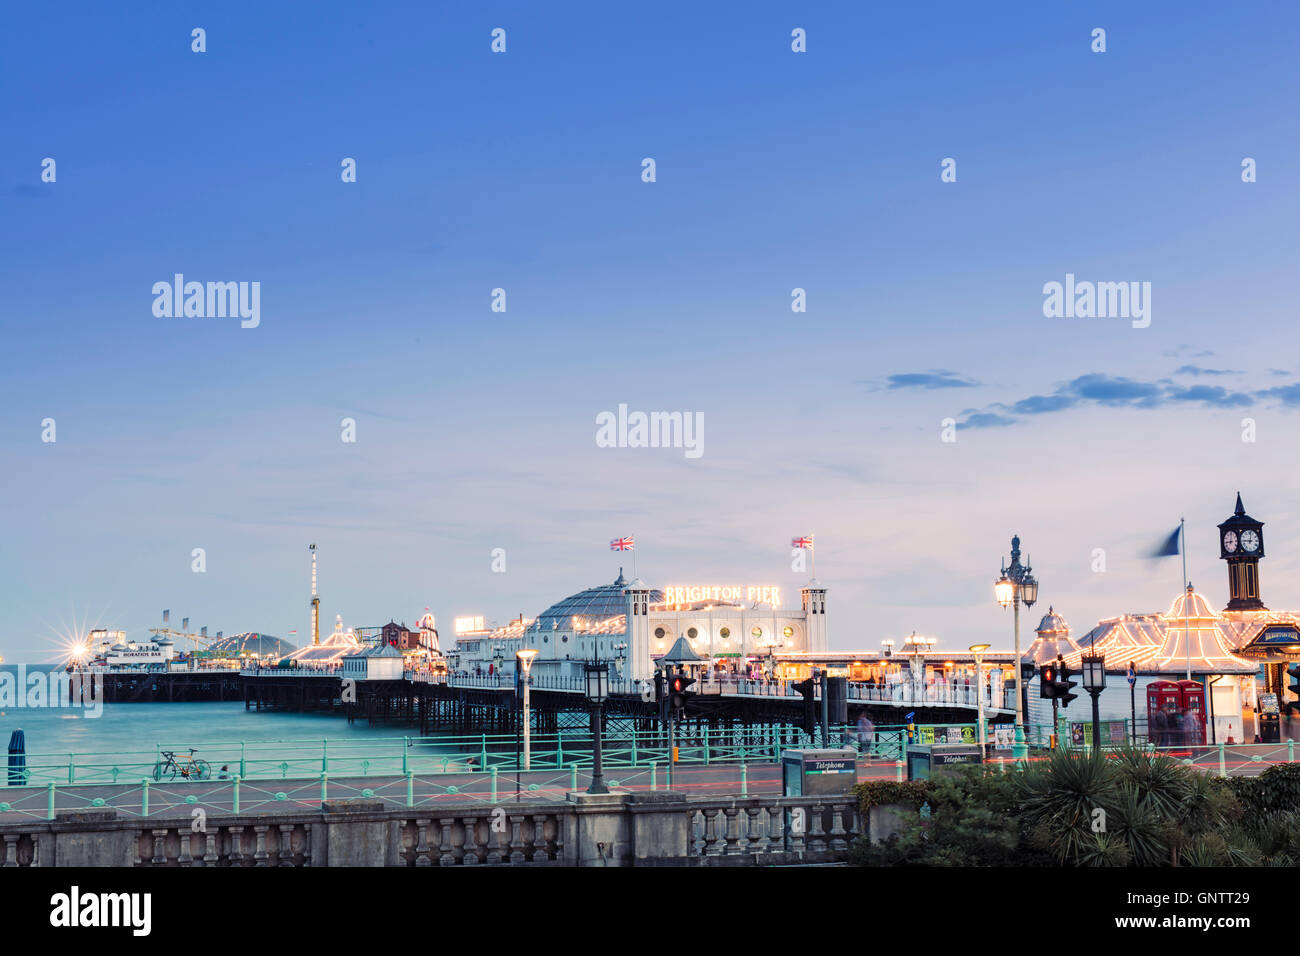 Brighton (Palast) Pier in Brighton, East Sussex Stockfoto